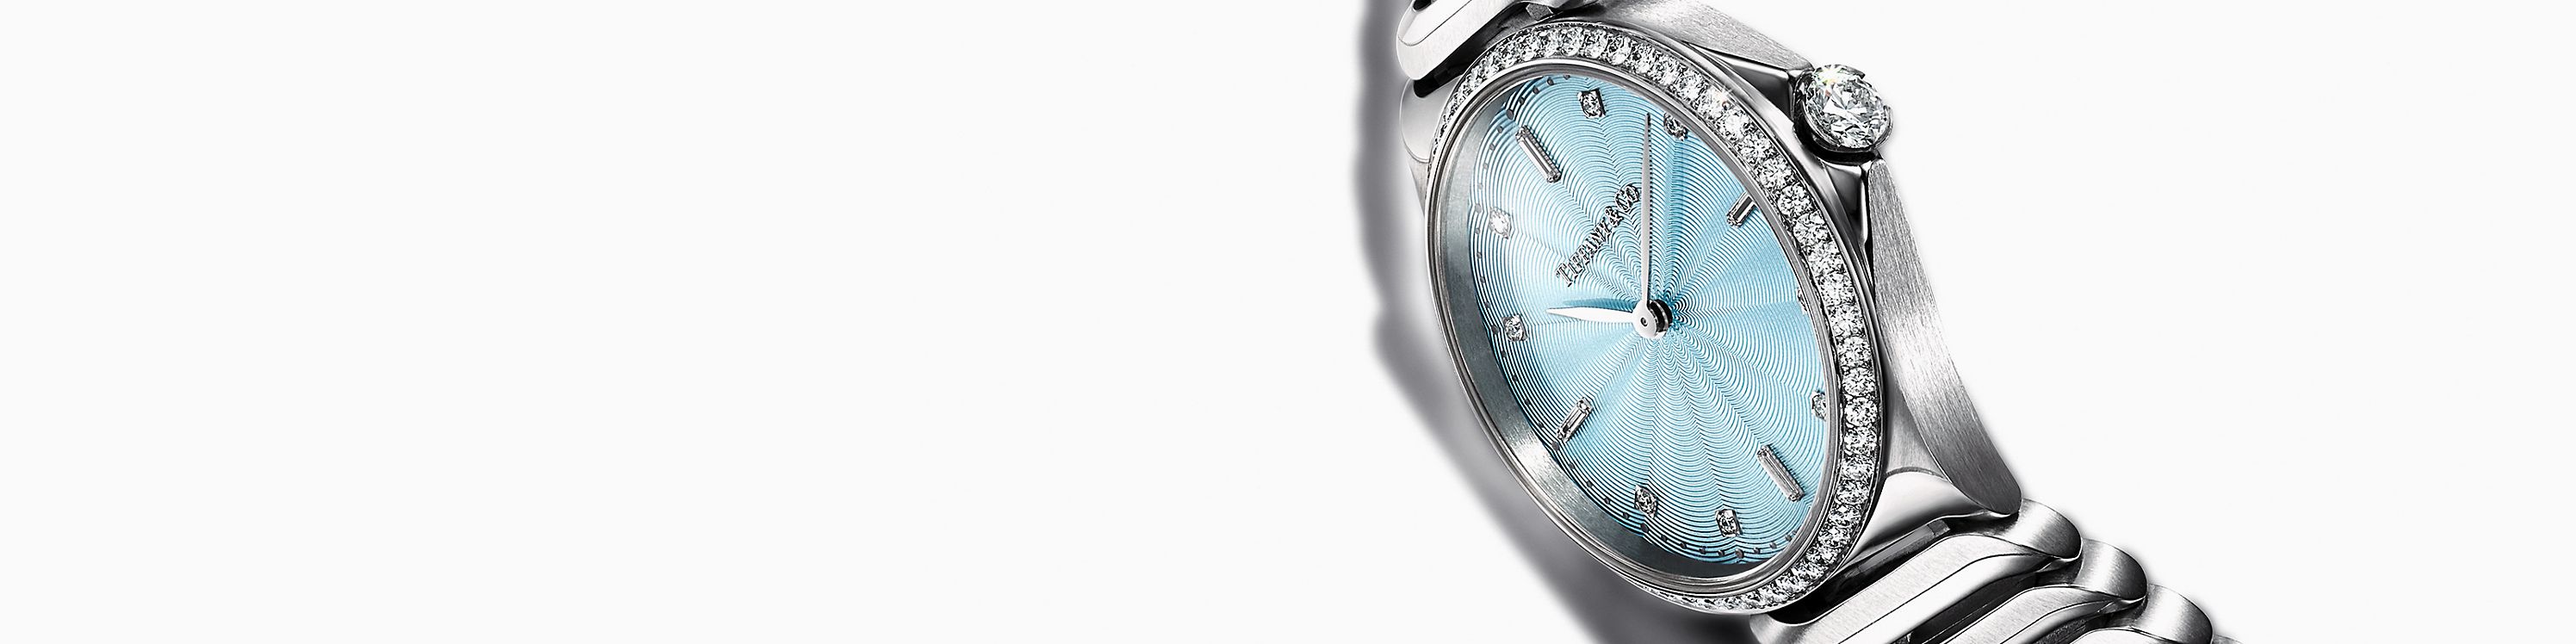 Посмотреть часы Tiffany Metro от Tiffany & Co.